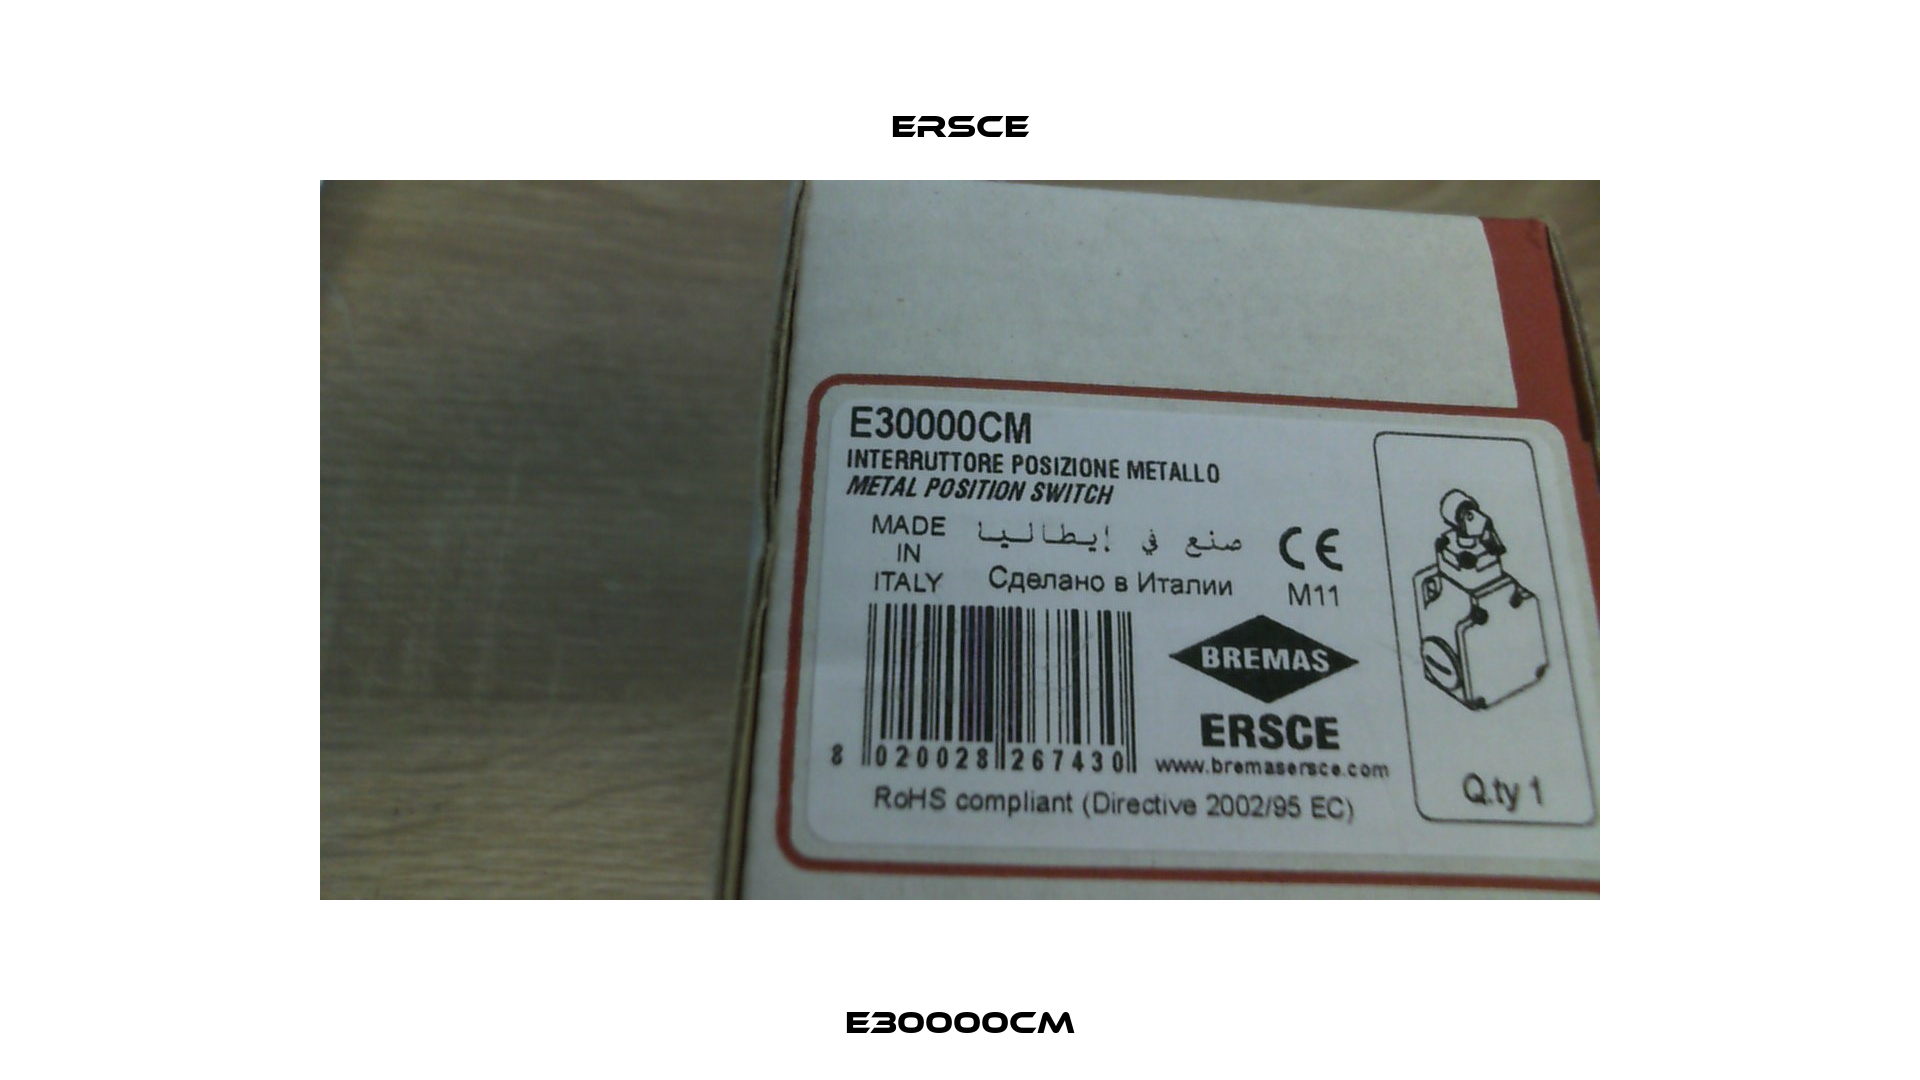 E30000CM Ersce